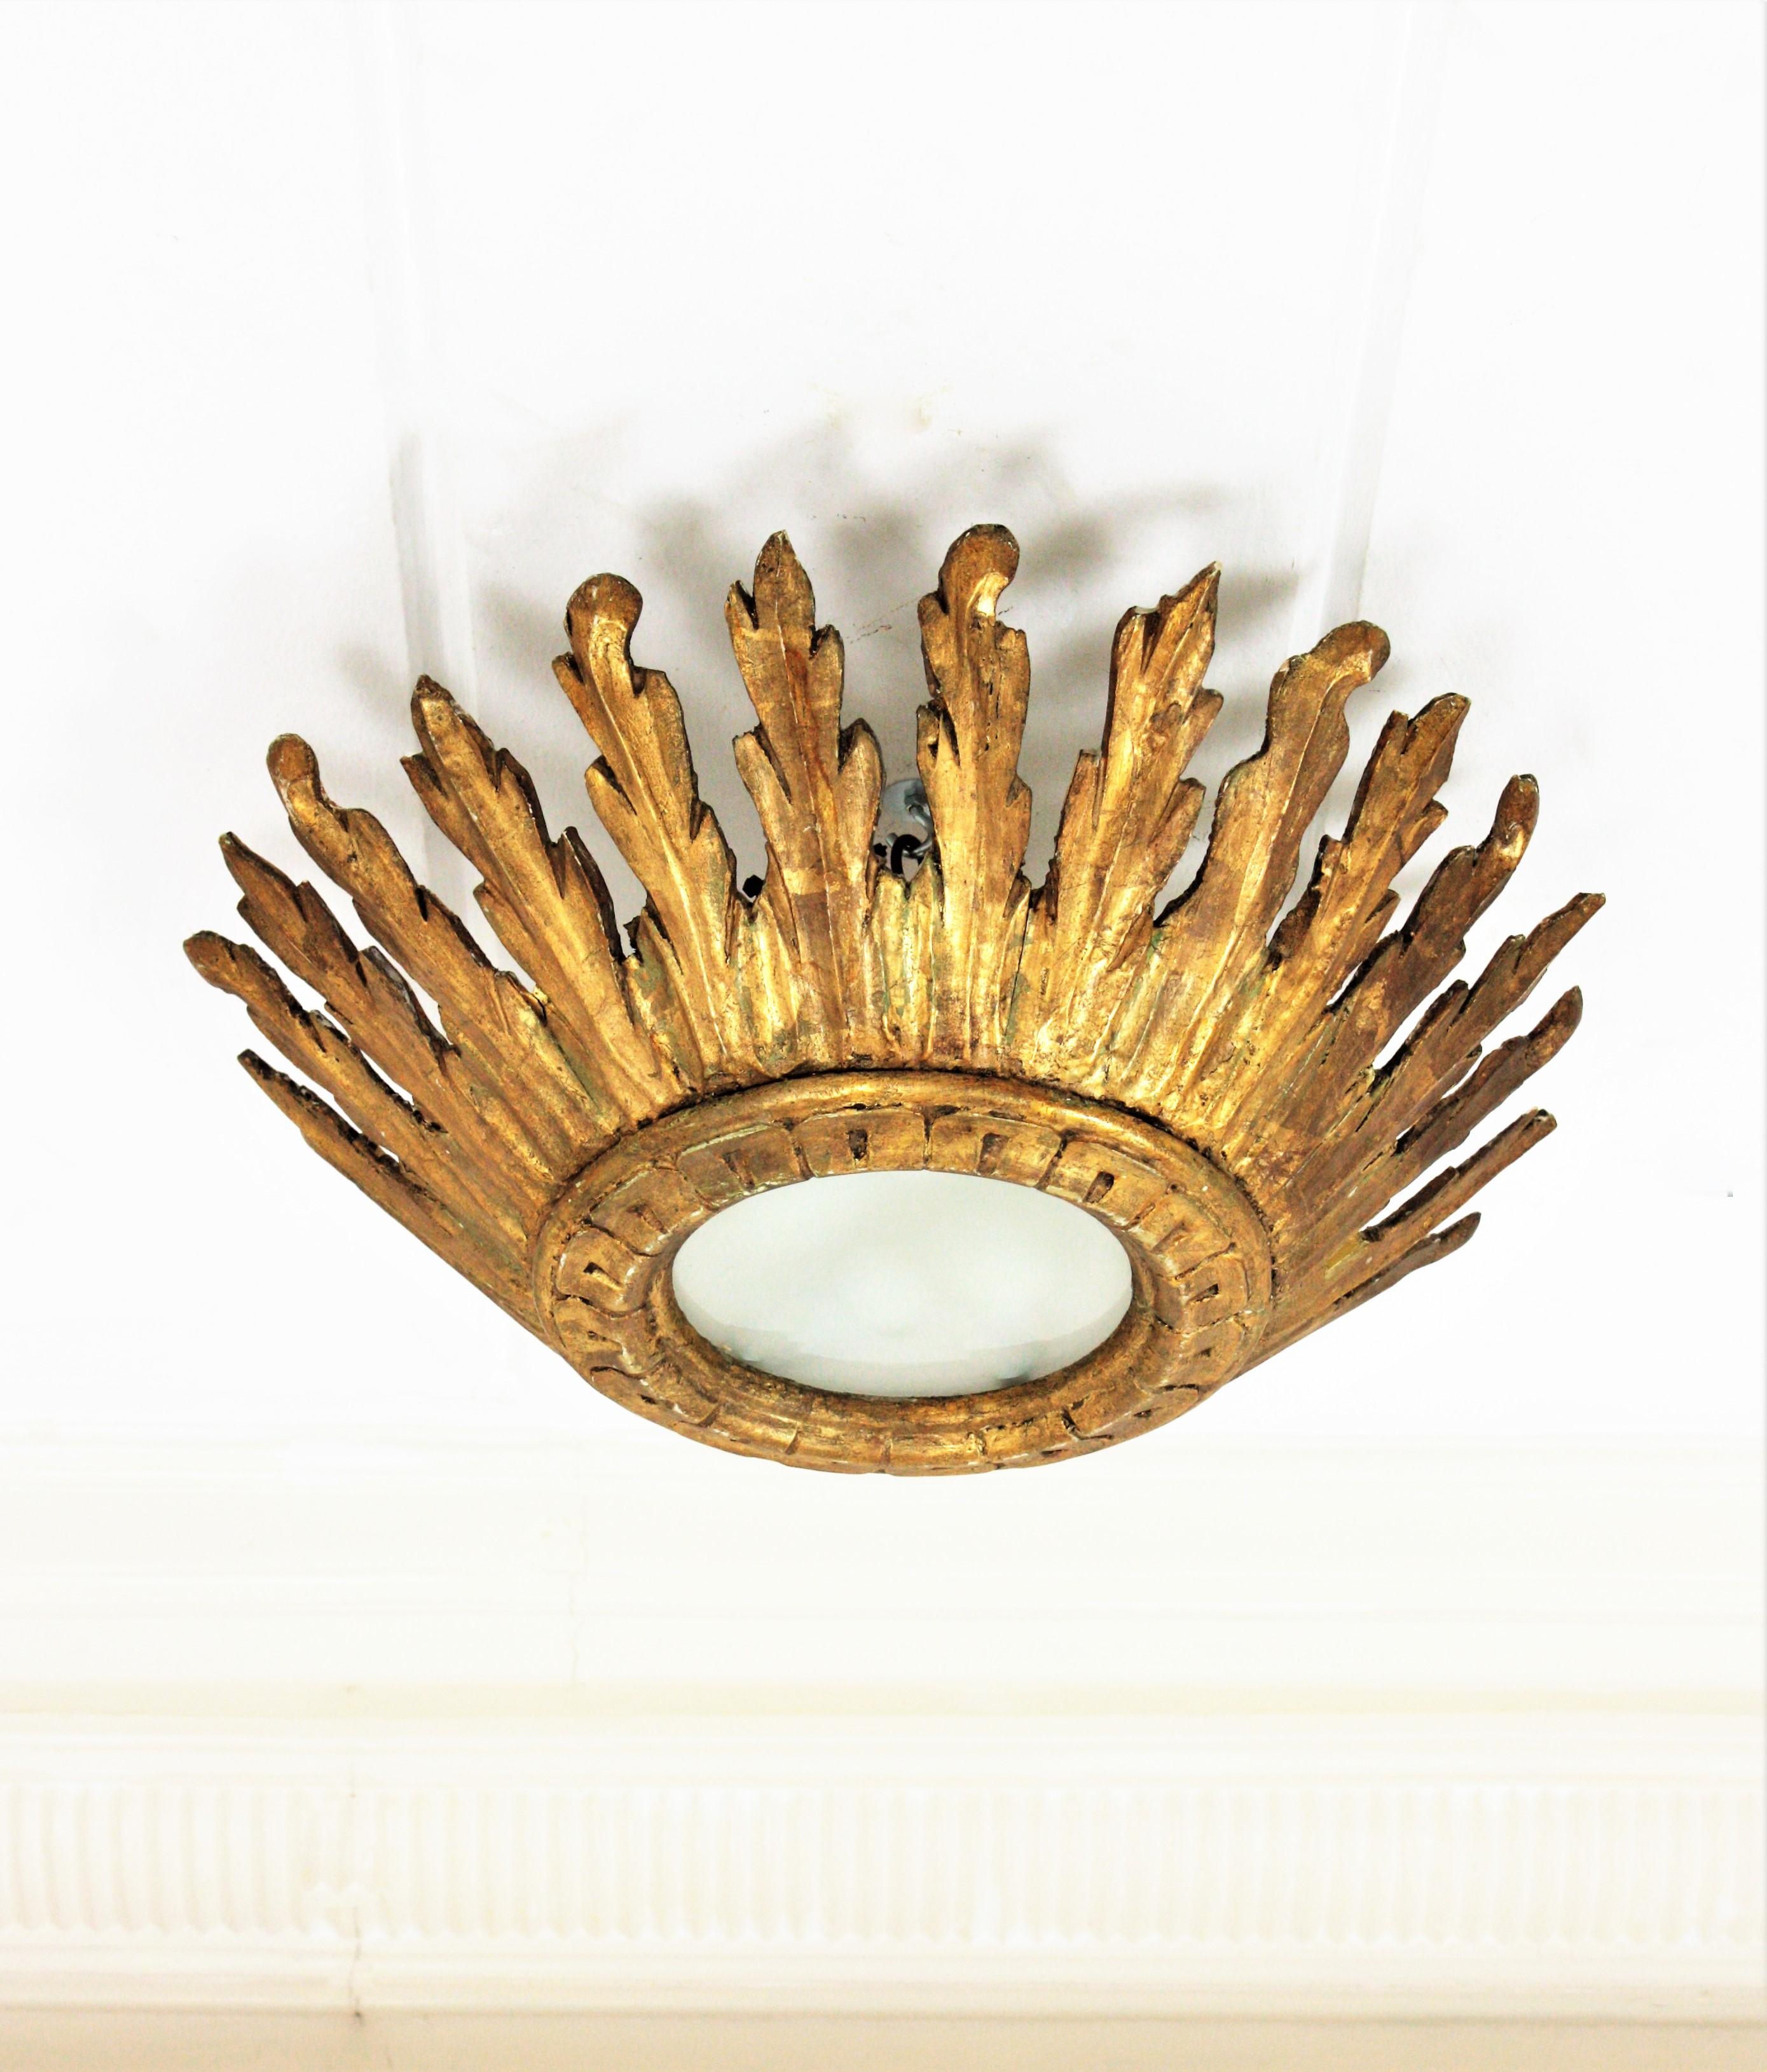 Sunburst Crown Ceiling Flush Mount Light Fixture in Giltwood, Spanish Baroque For Sale 1